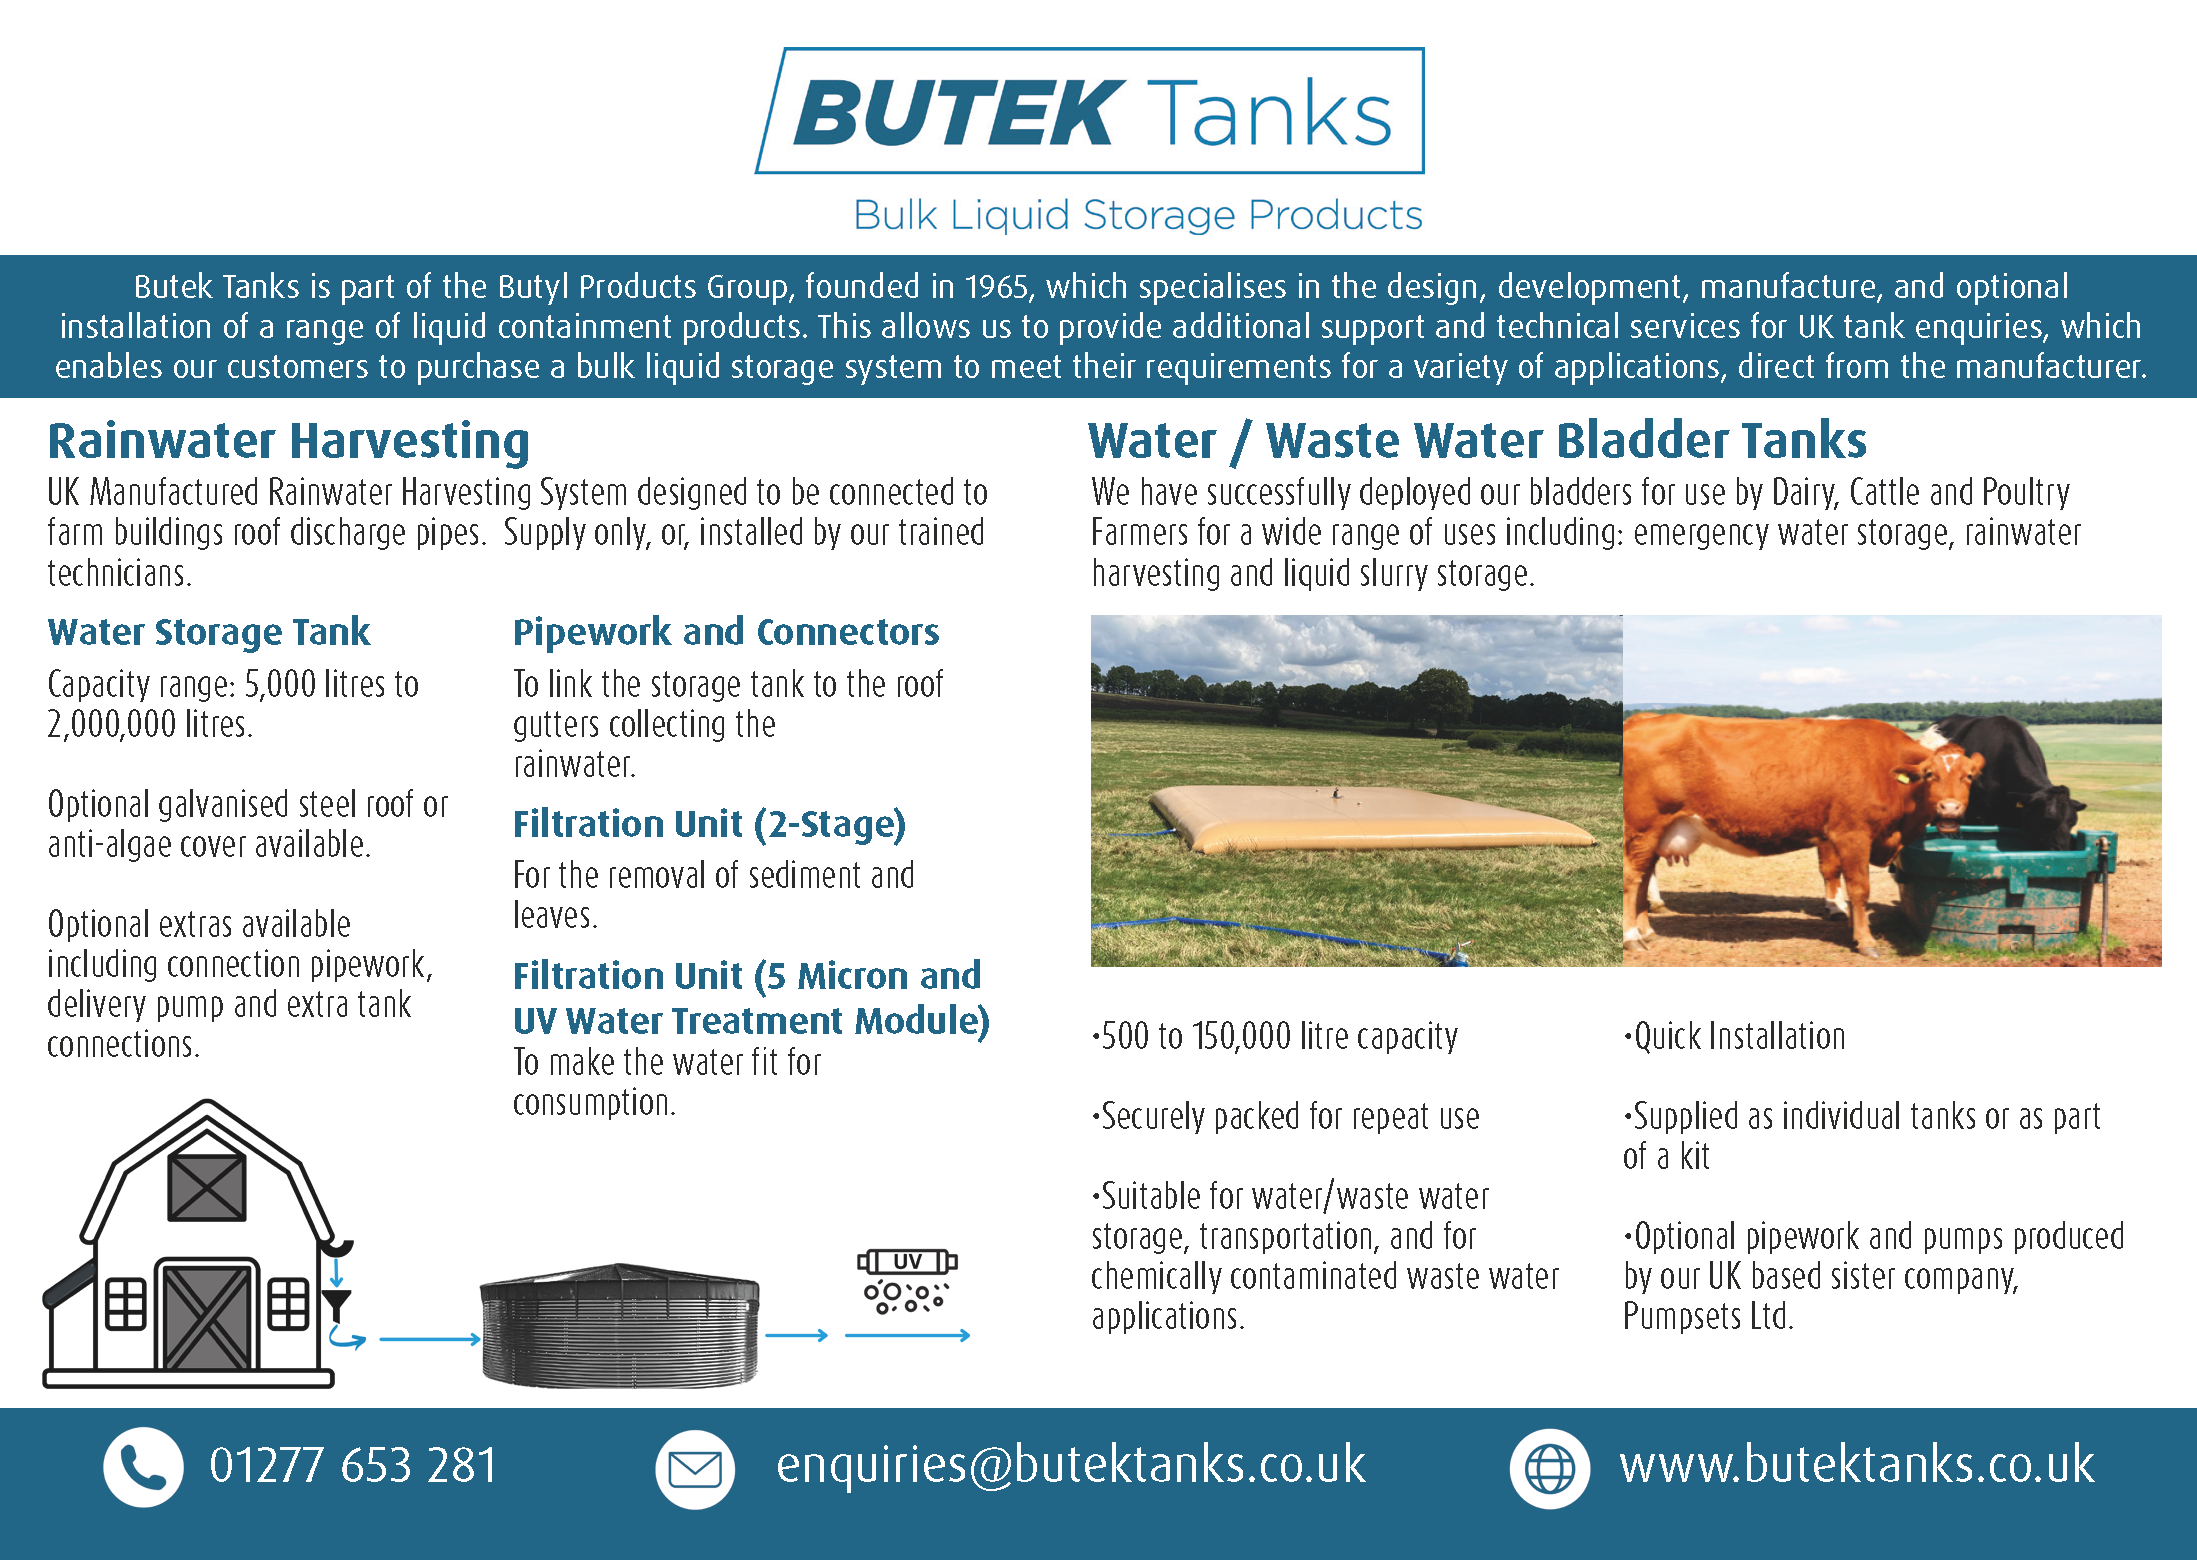 Butek Tanks - Rainwater Harvesting and Water/Waste Water Bladder Tanks